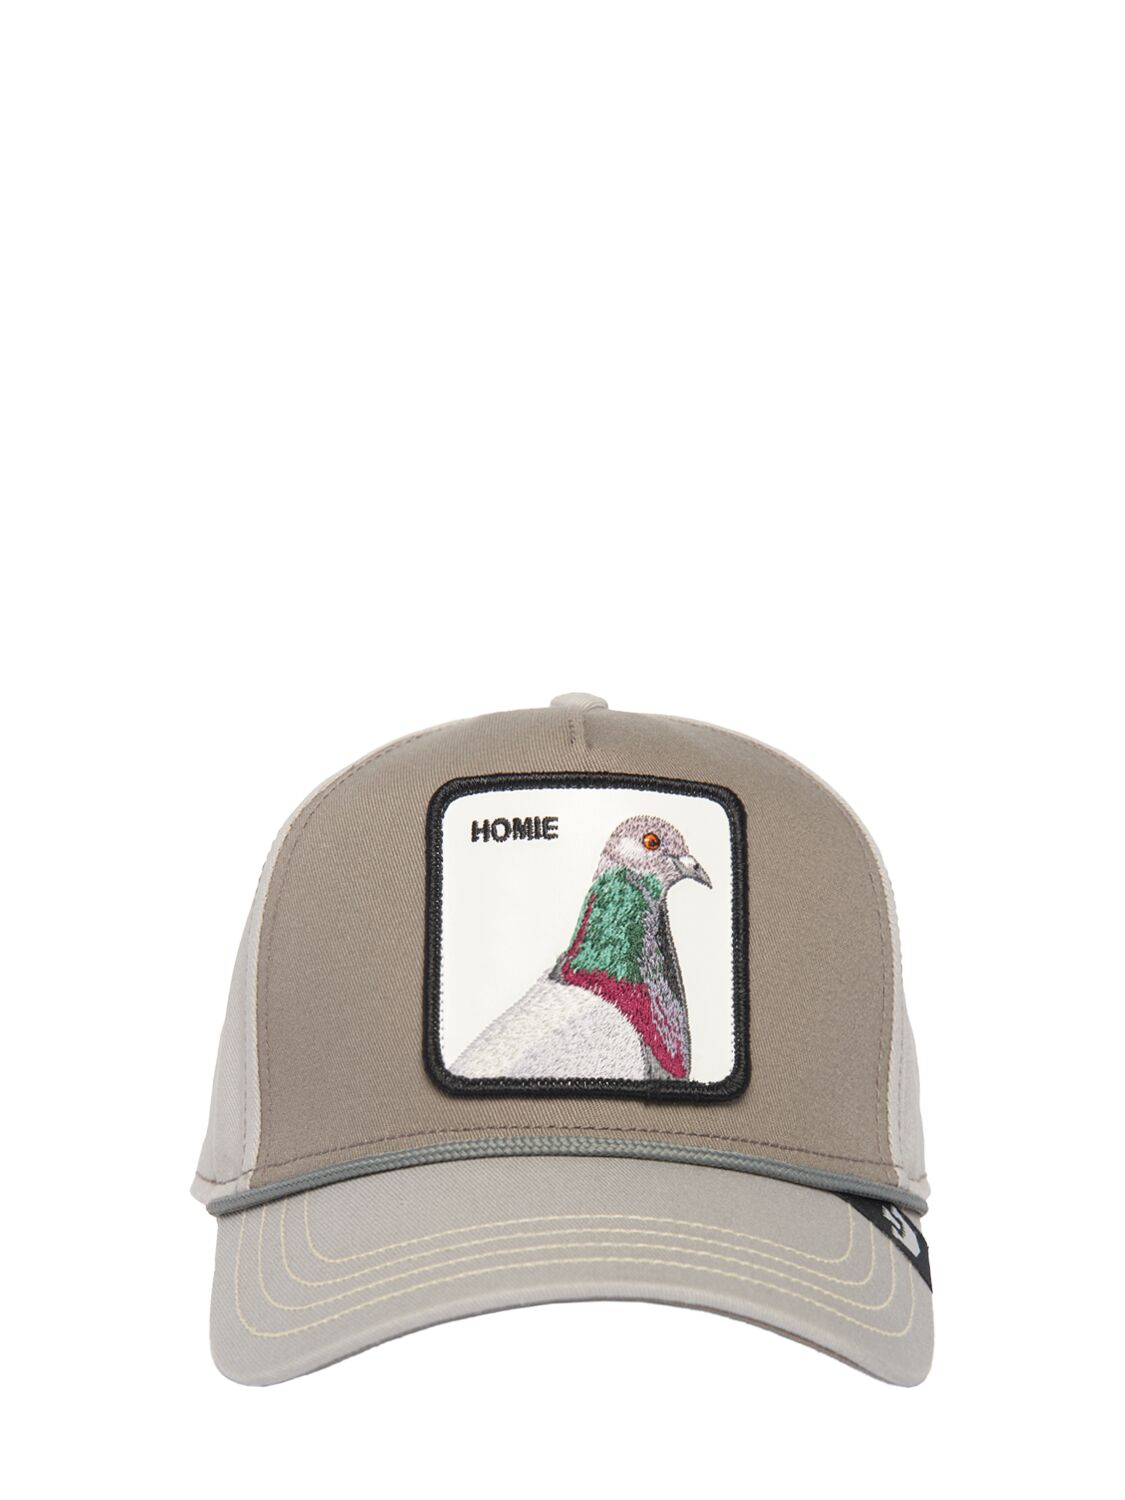 Goorin Bros Pigeon 100棒球帽 In Beige,grey